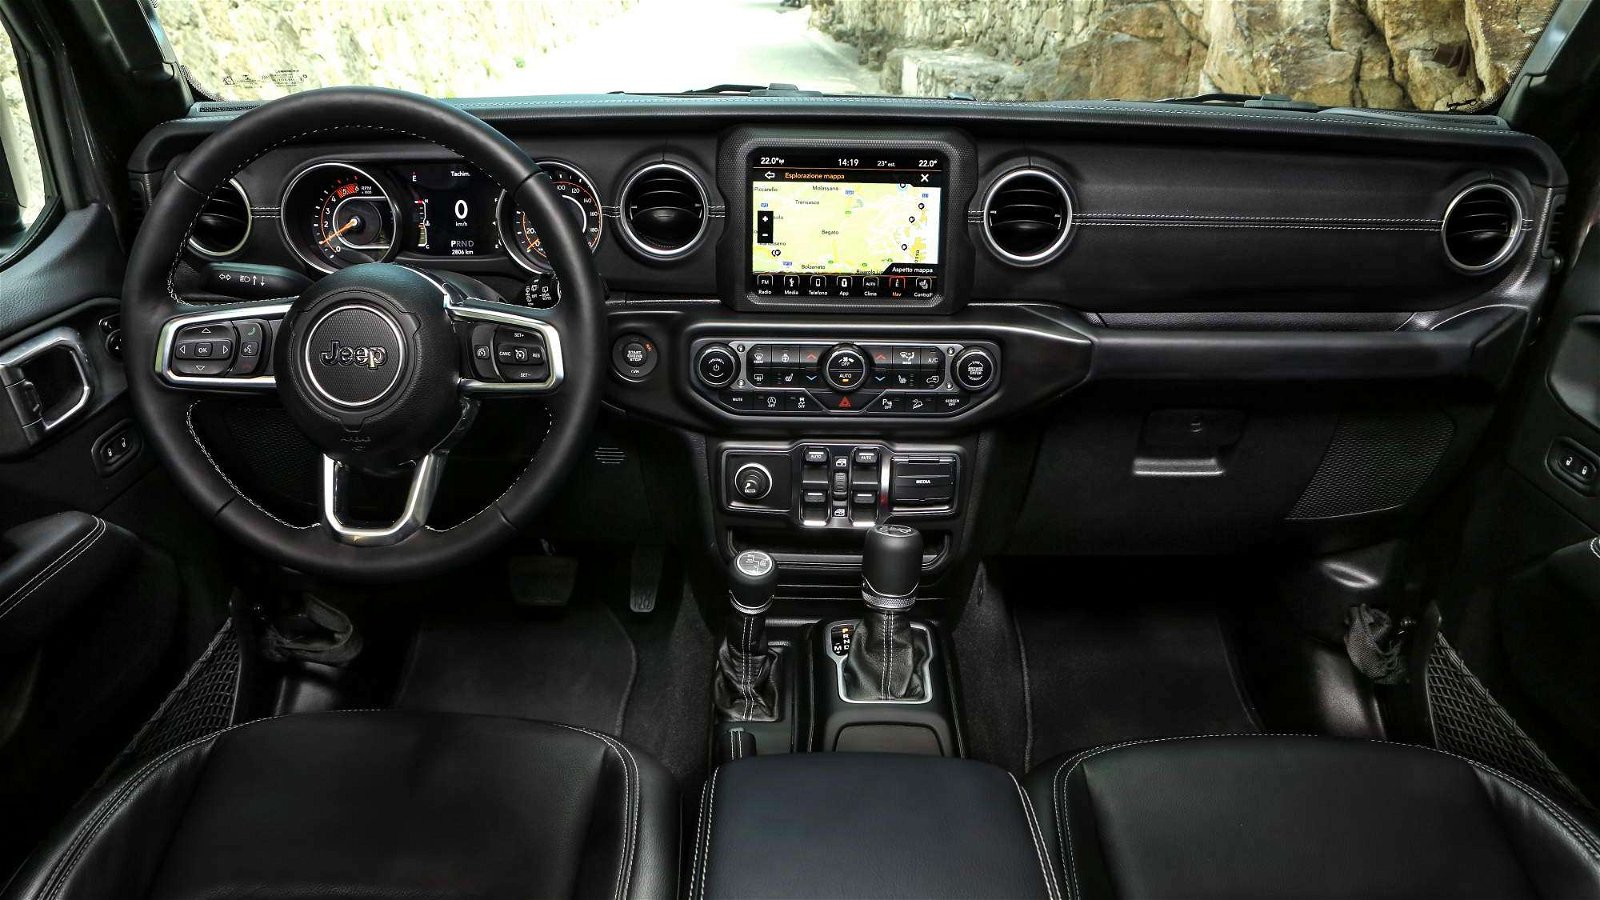 2019-Jeep-Wrangler-interior-7-3255